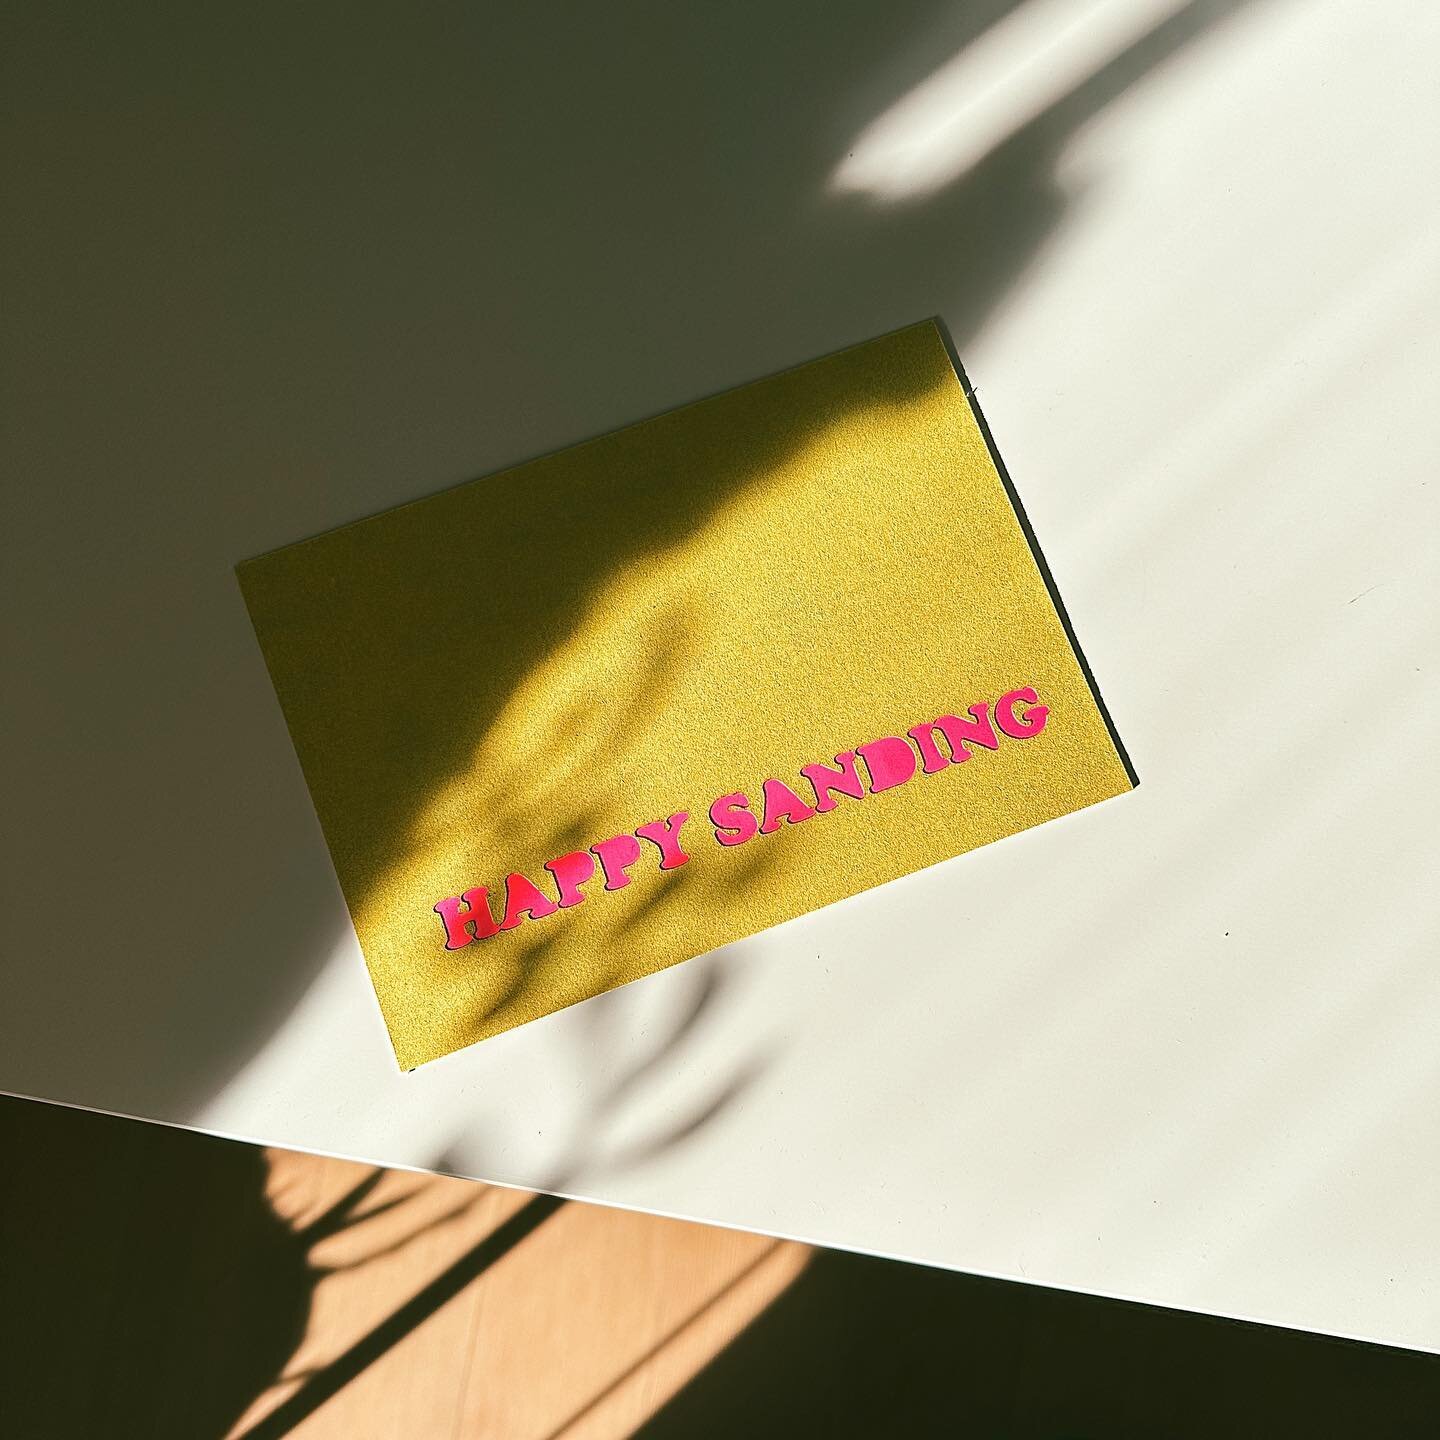 We cut sanding paper 🤓

Postcard made to sand a pice of brass we sent to @roberto_inderbitzin I think it put a smile on his face. 

#Laser #lasercutting #laserengraving #designstudio #swissdesignstudio #aargau #windisch #switzerland #sanding #sandin